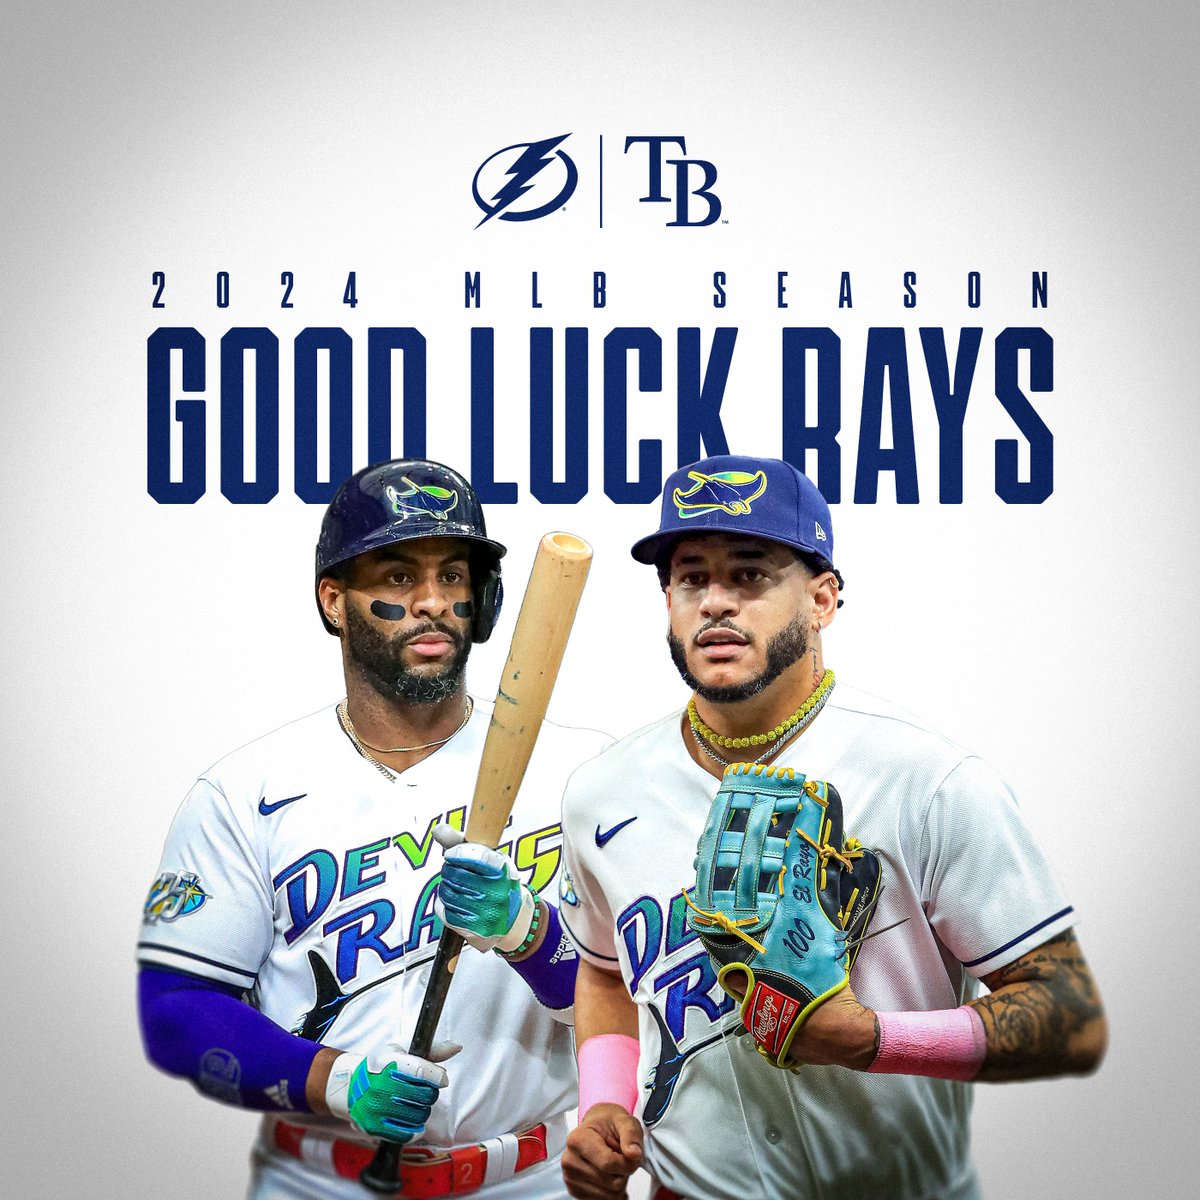 It's your time to shine, @RaysBaseball 🤩

Good luck this season! 

#TeamTampaBay | #GoBolts